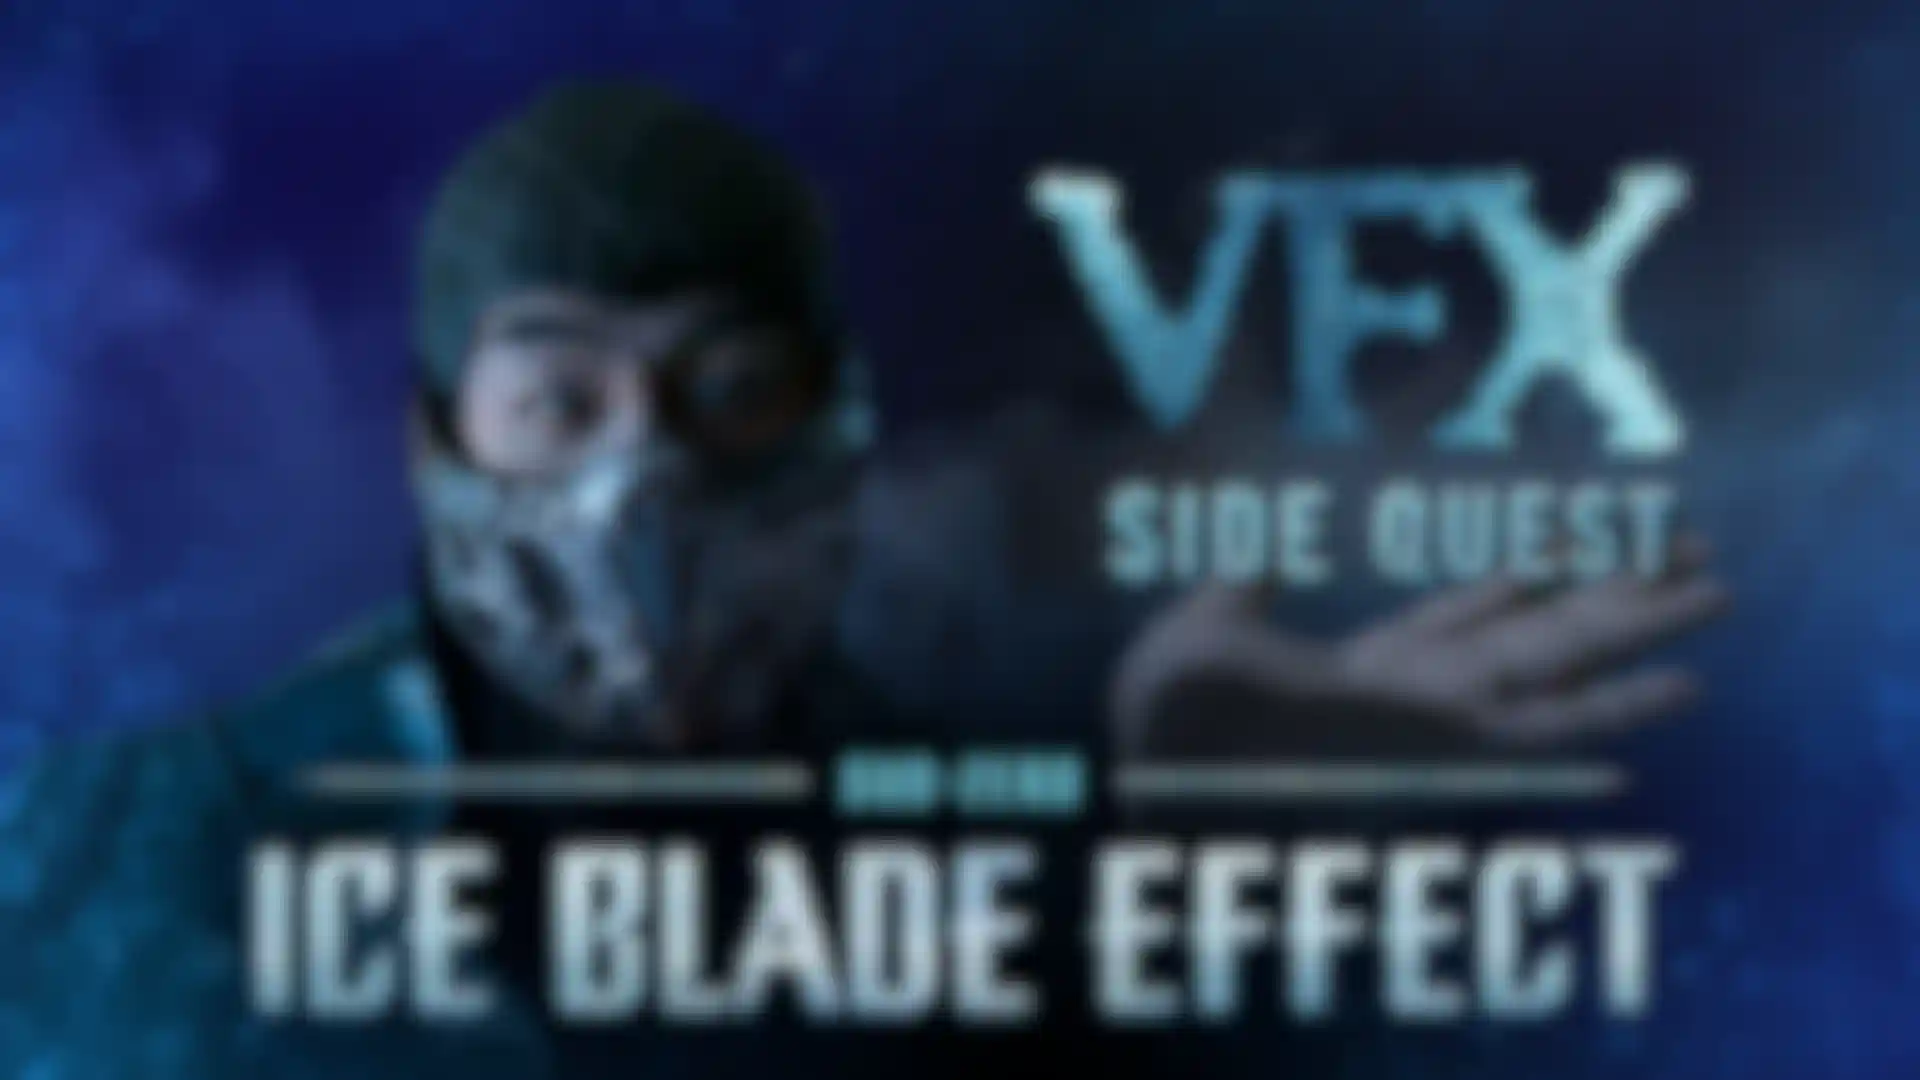 Recreate Sub-Zero's Ice Blade from Mortal Kombat (2021) image